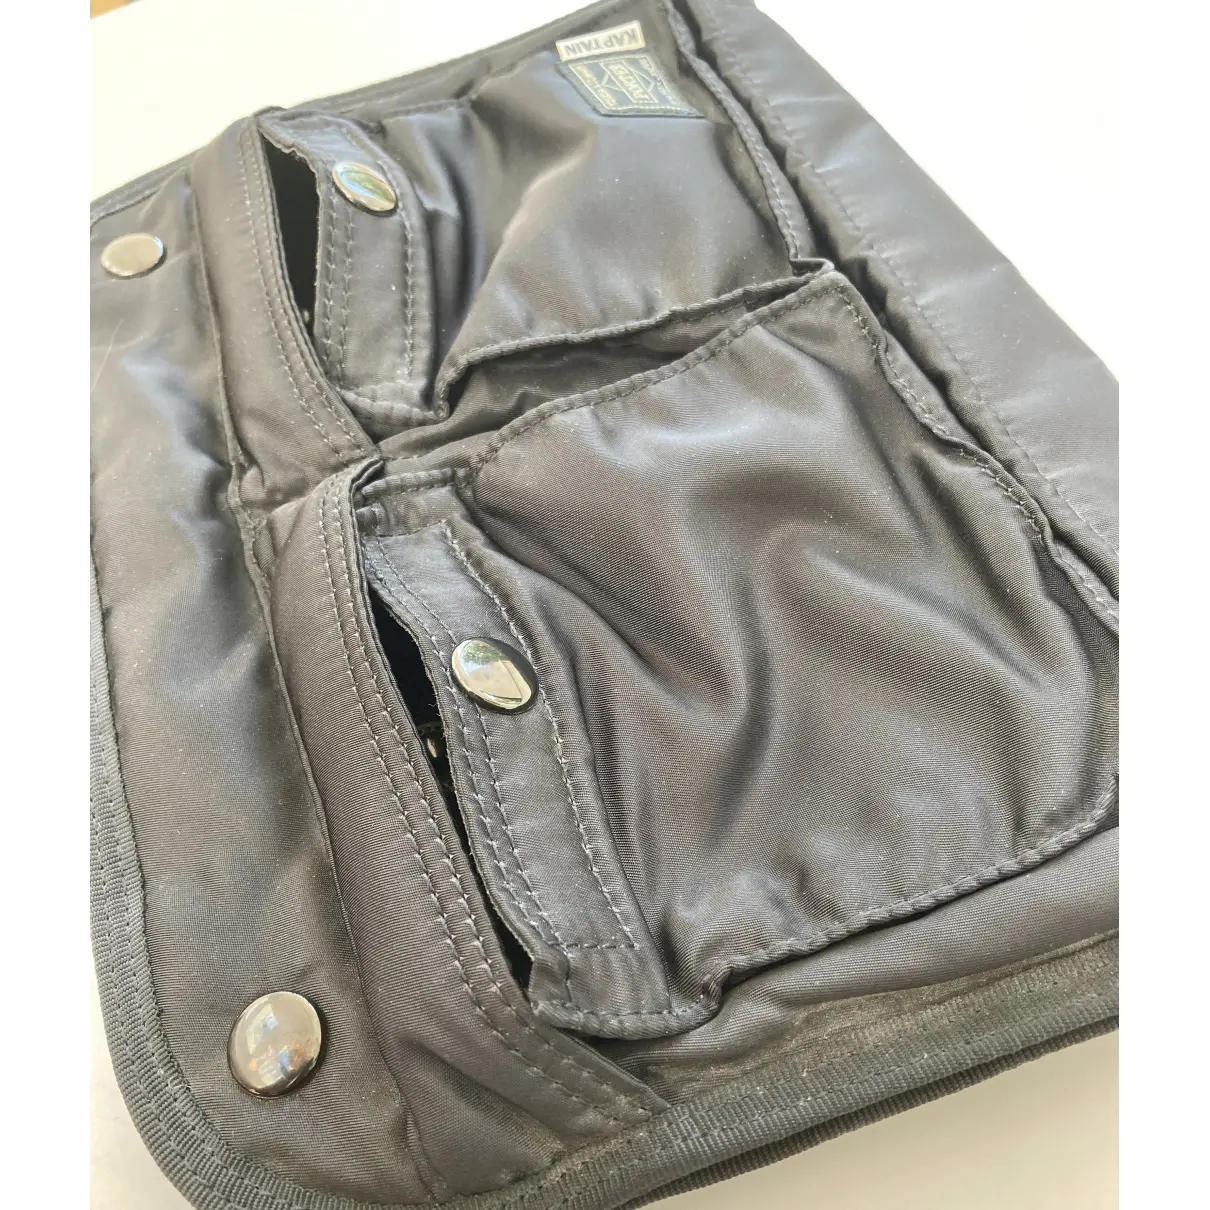 Buy Porter by Yoshida Kaban Small bag online